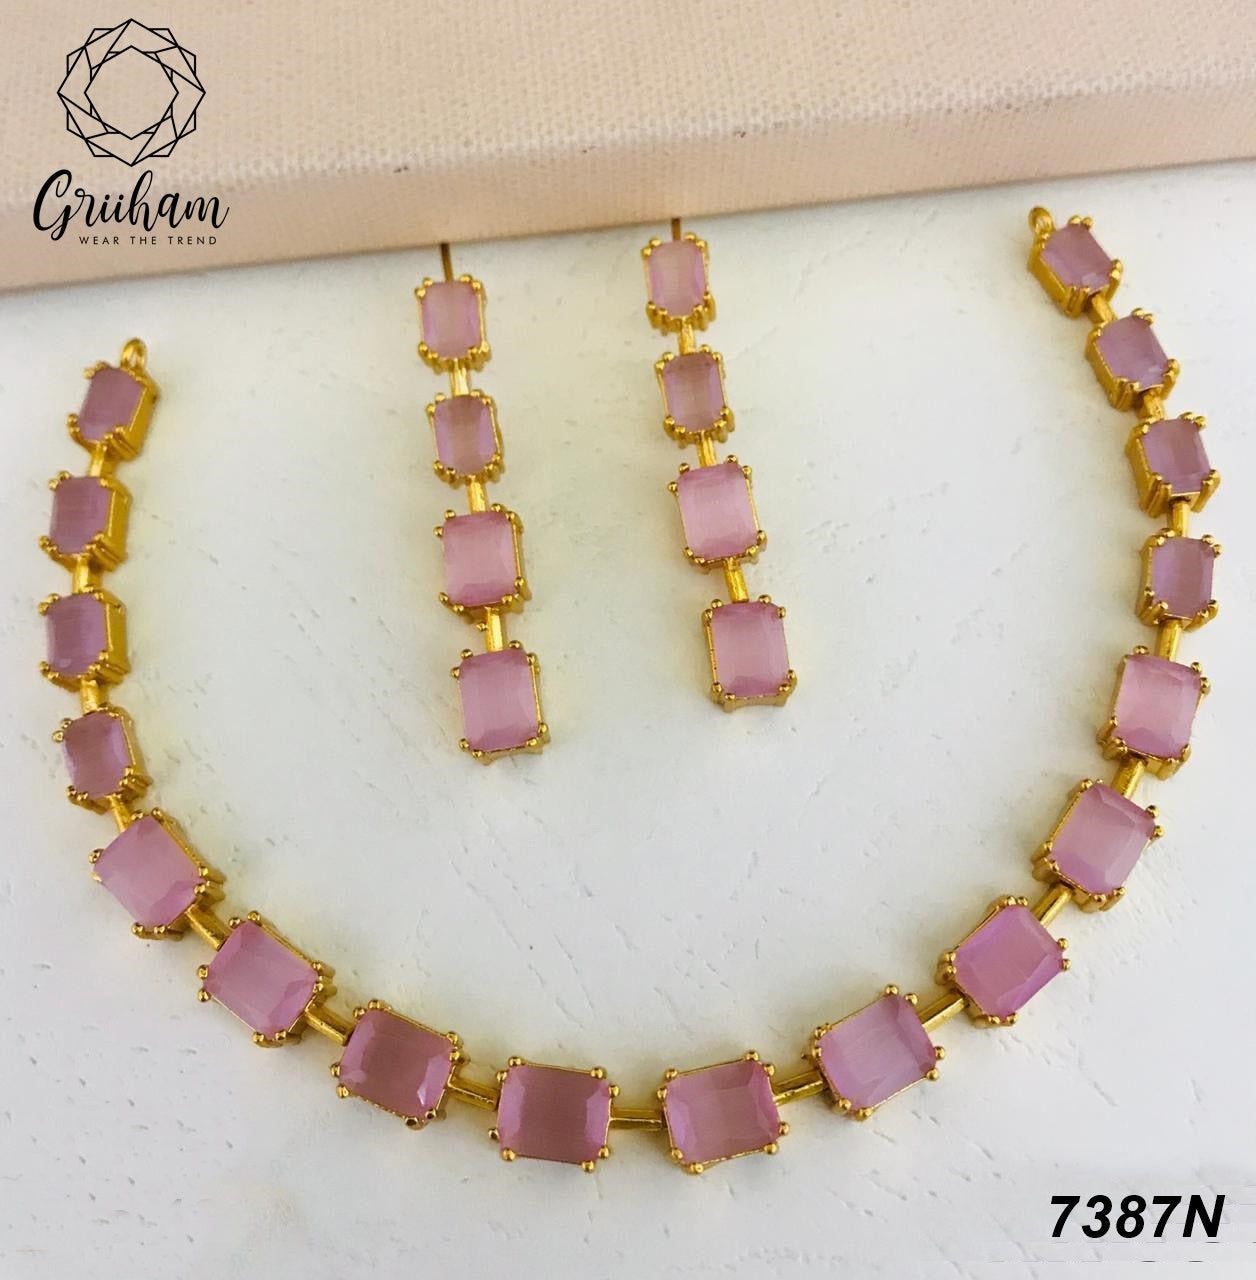 Premium Quality CZ Zercon Pastel Pink Stones Necklace Set 7387N